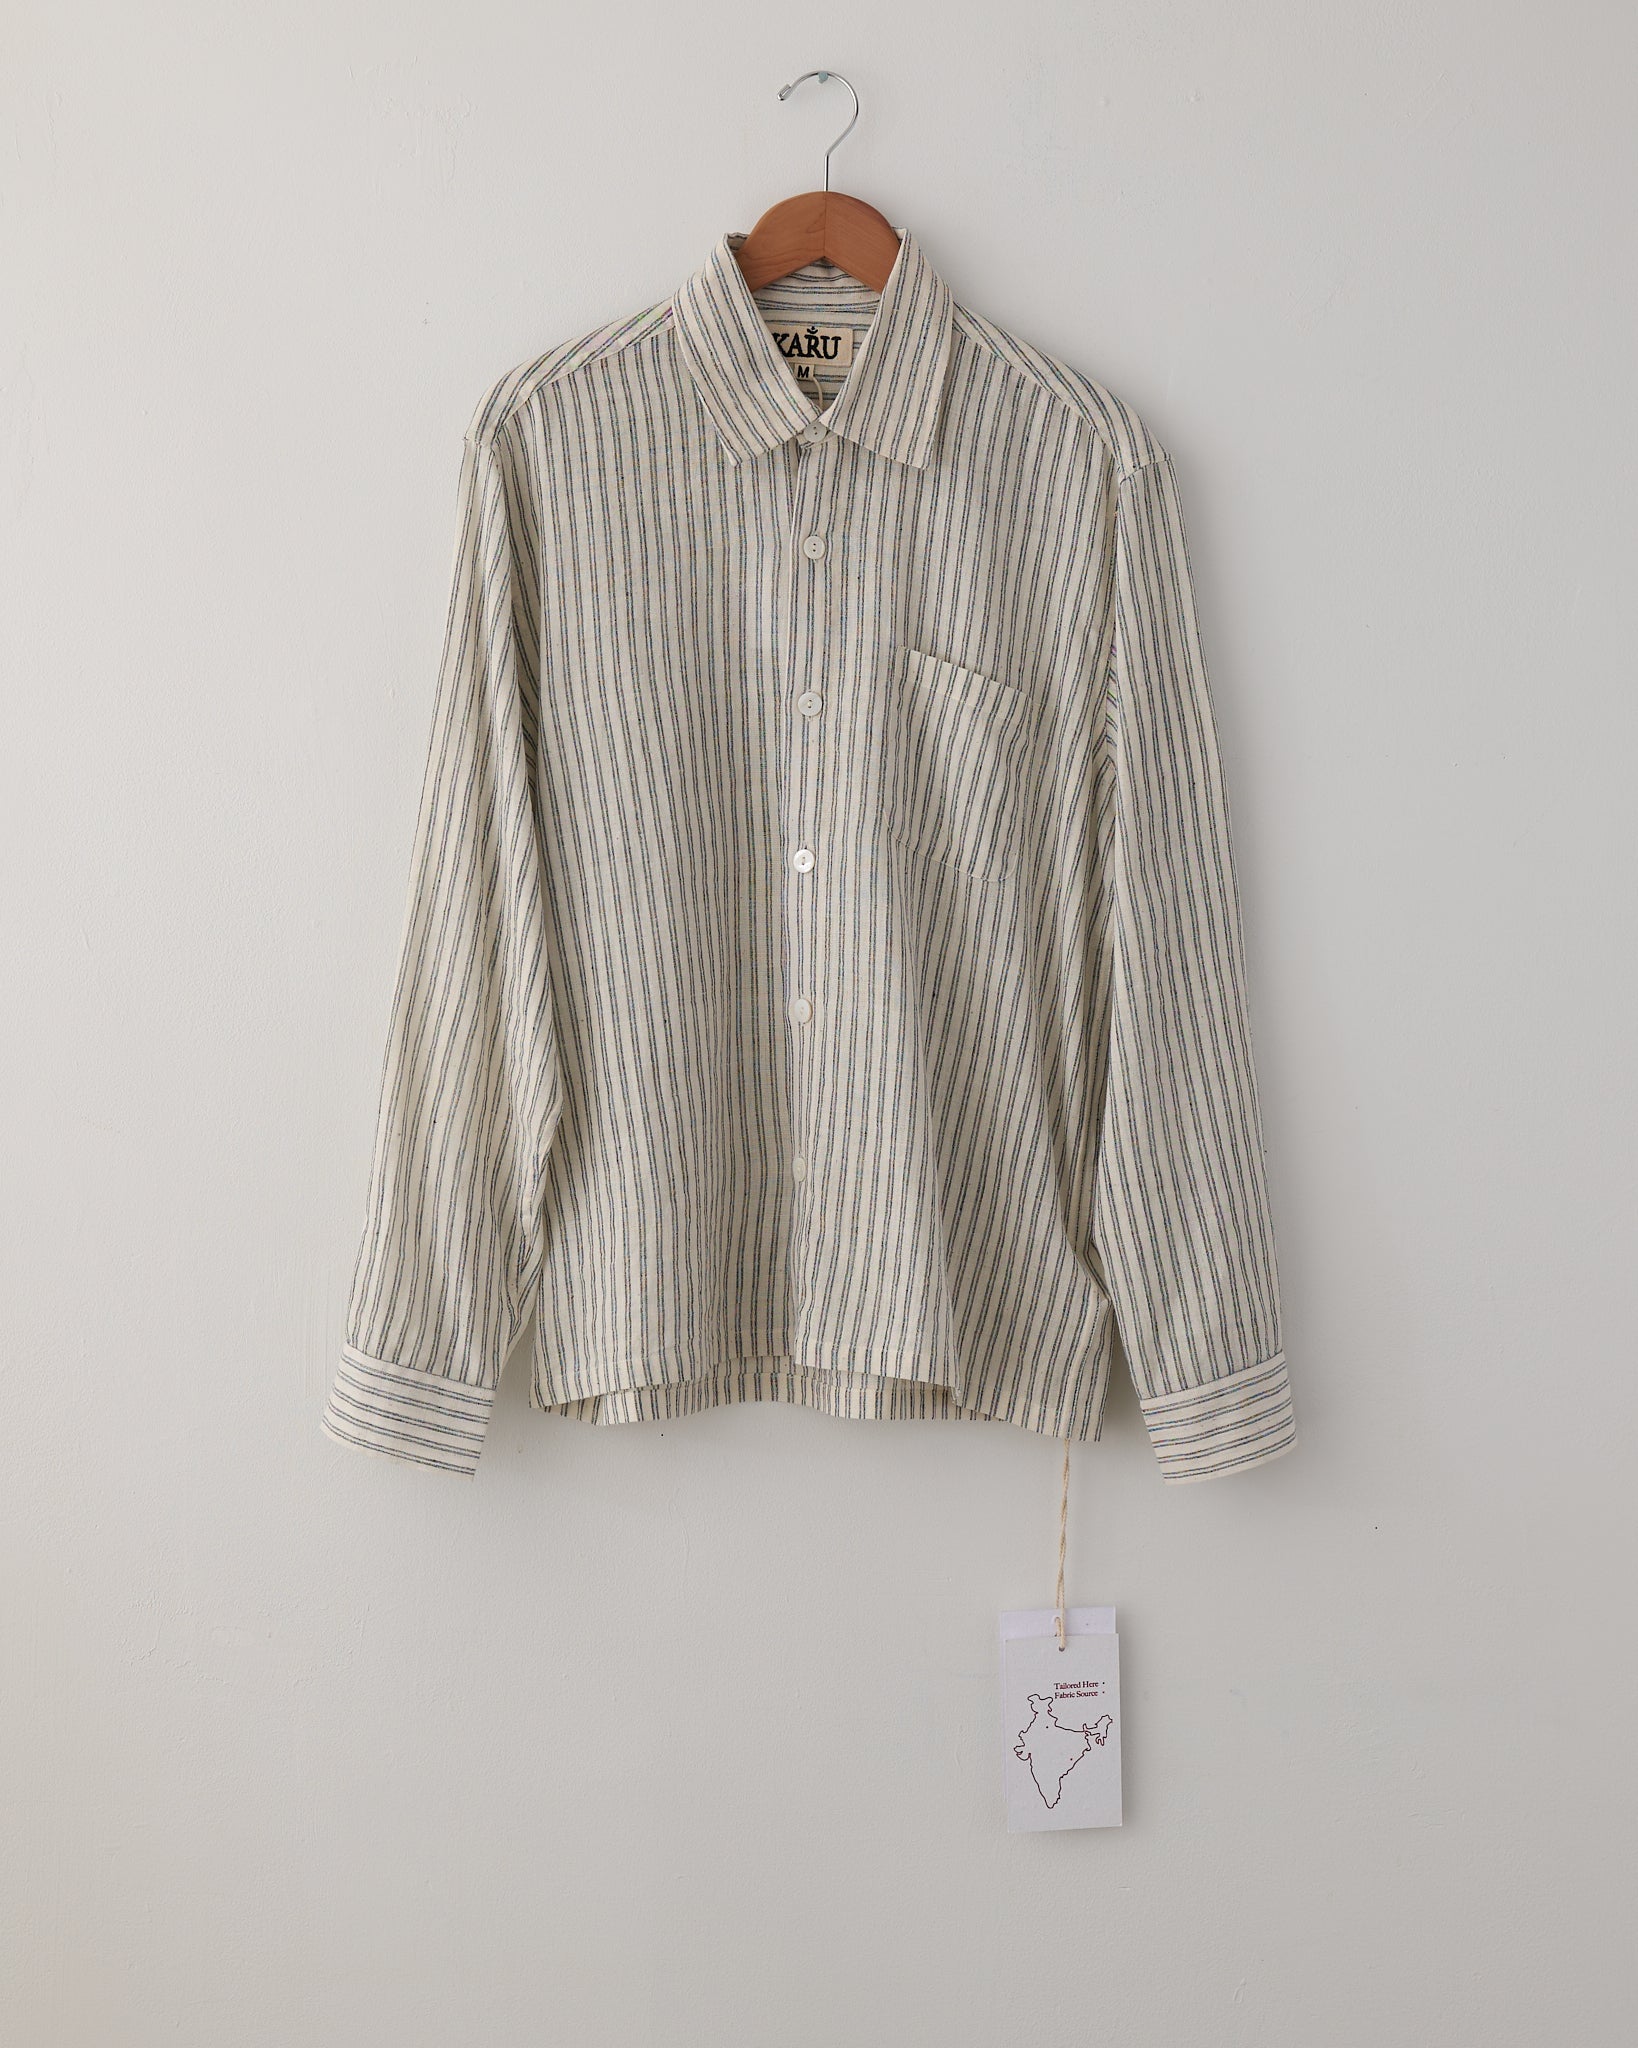 Cotton Woven Shirt